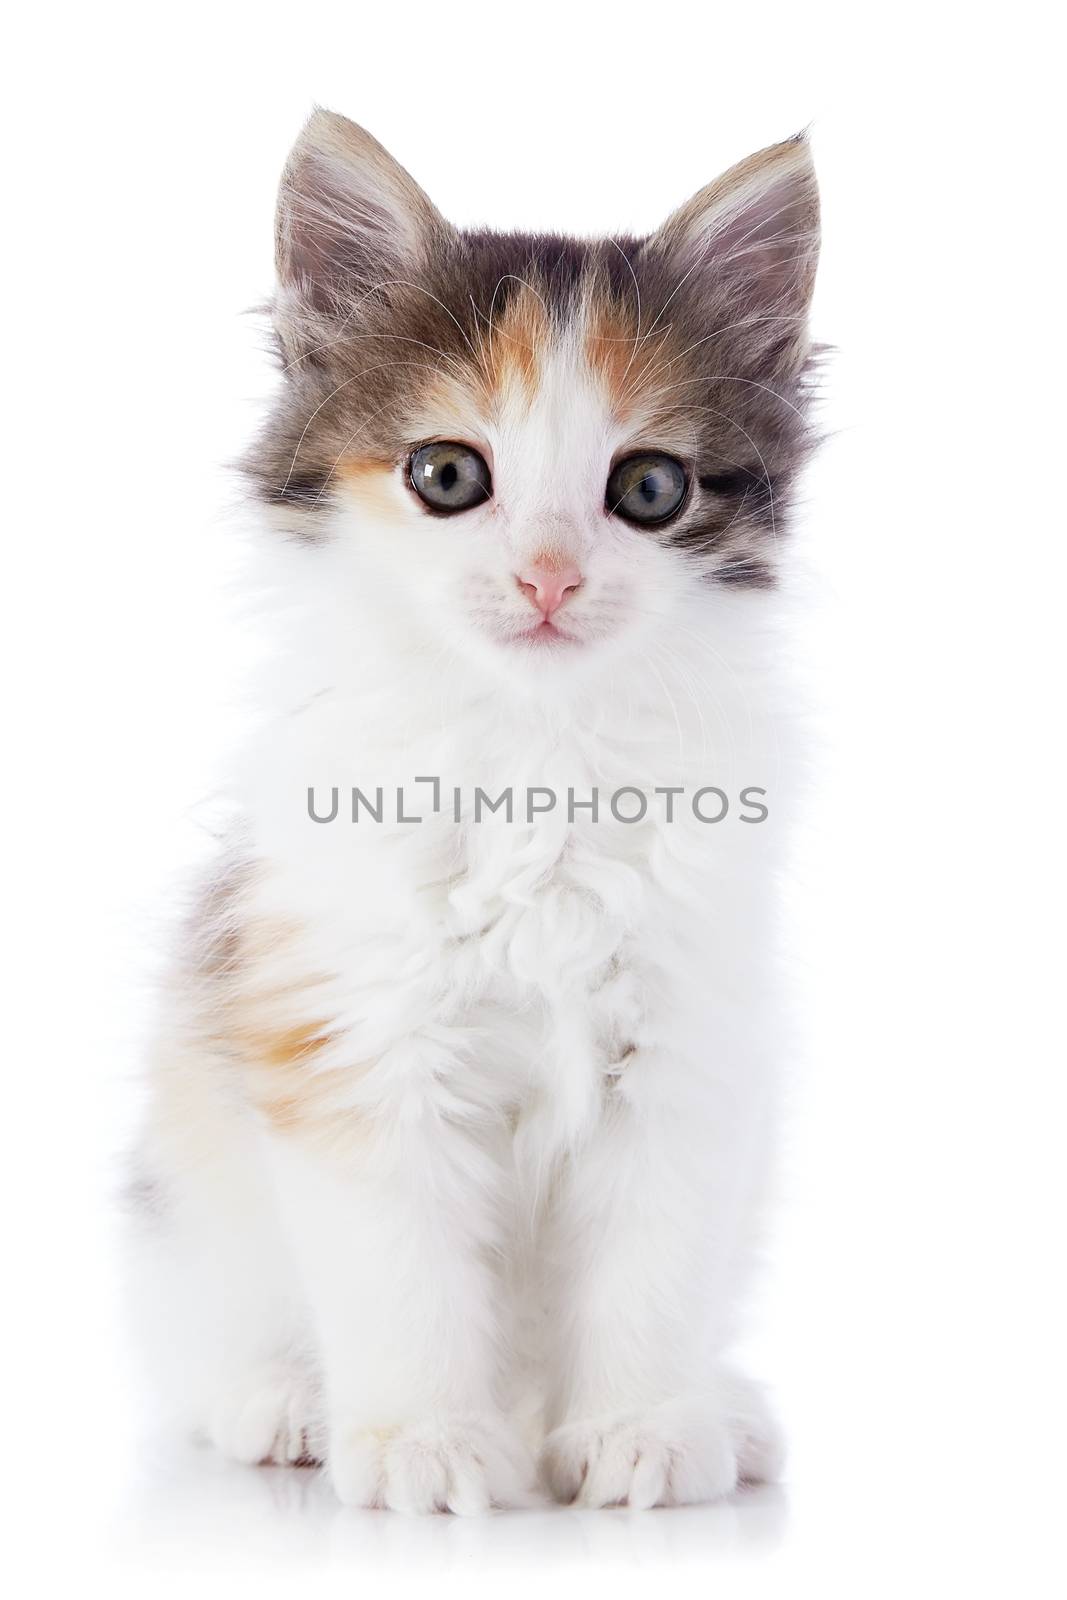 Multi-colored small kitten. Kitten on a white background. Small predator. Small cat.